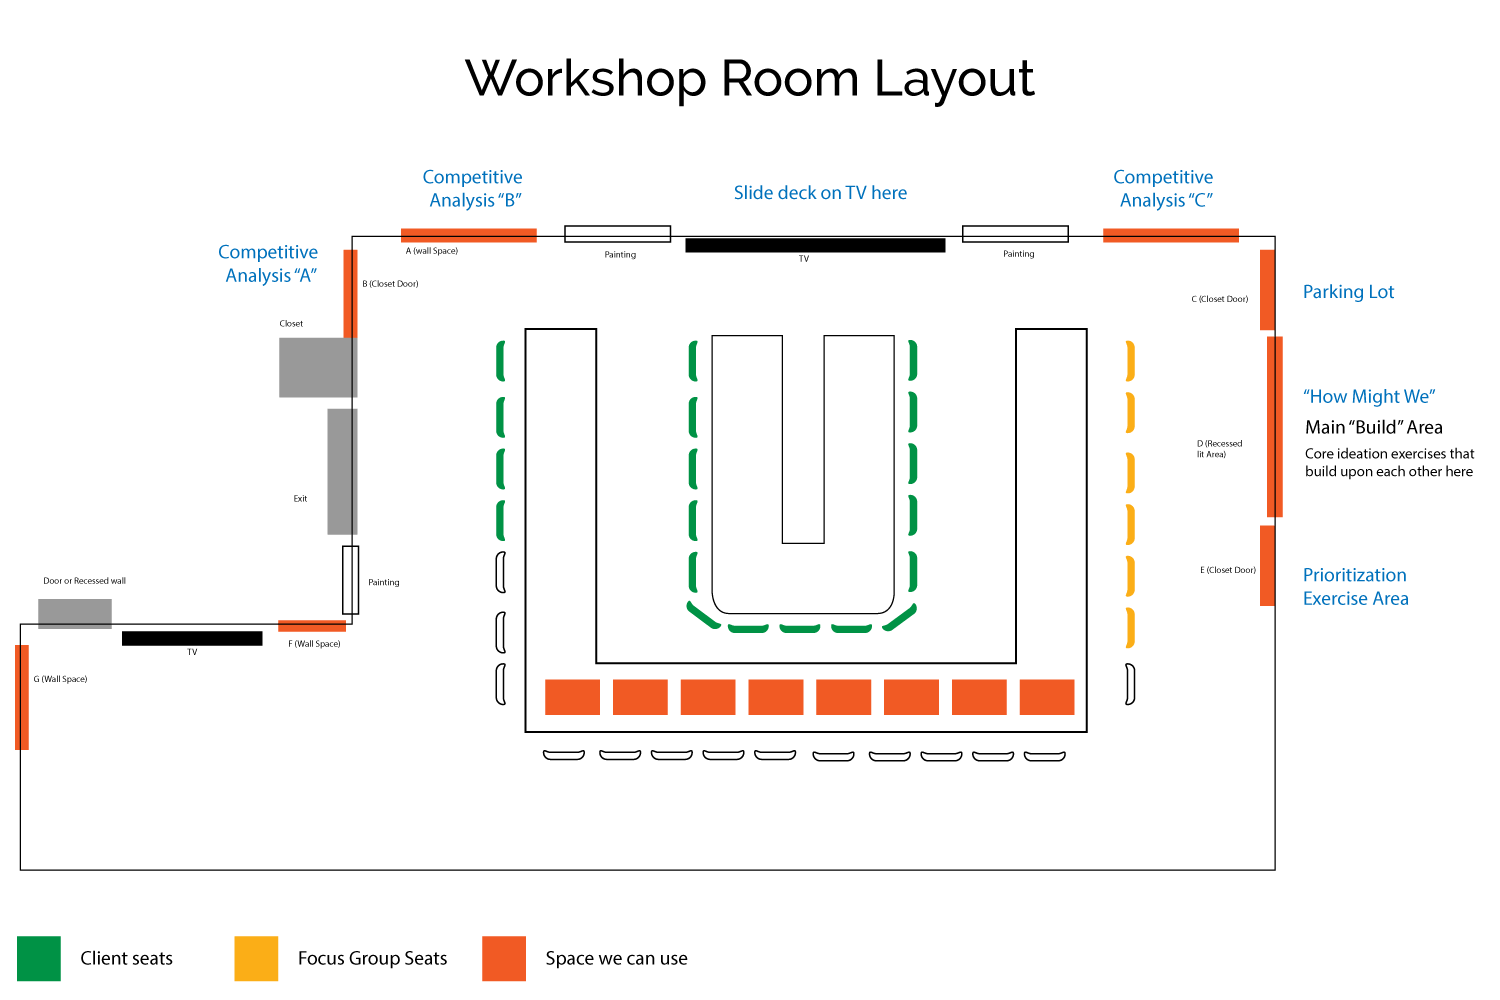 art workshop business plan